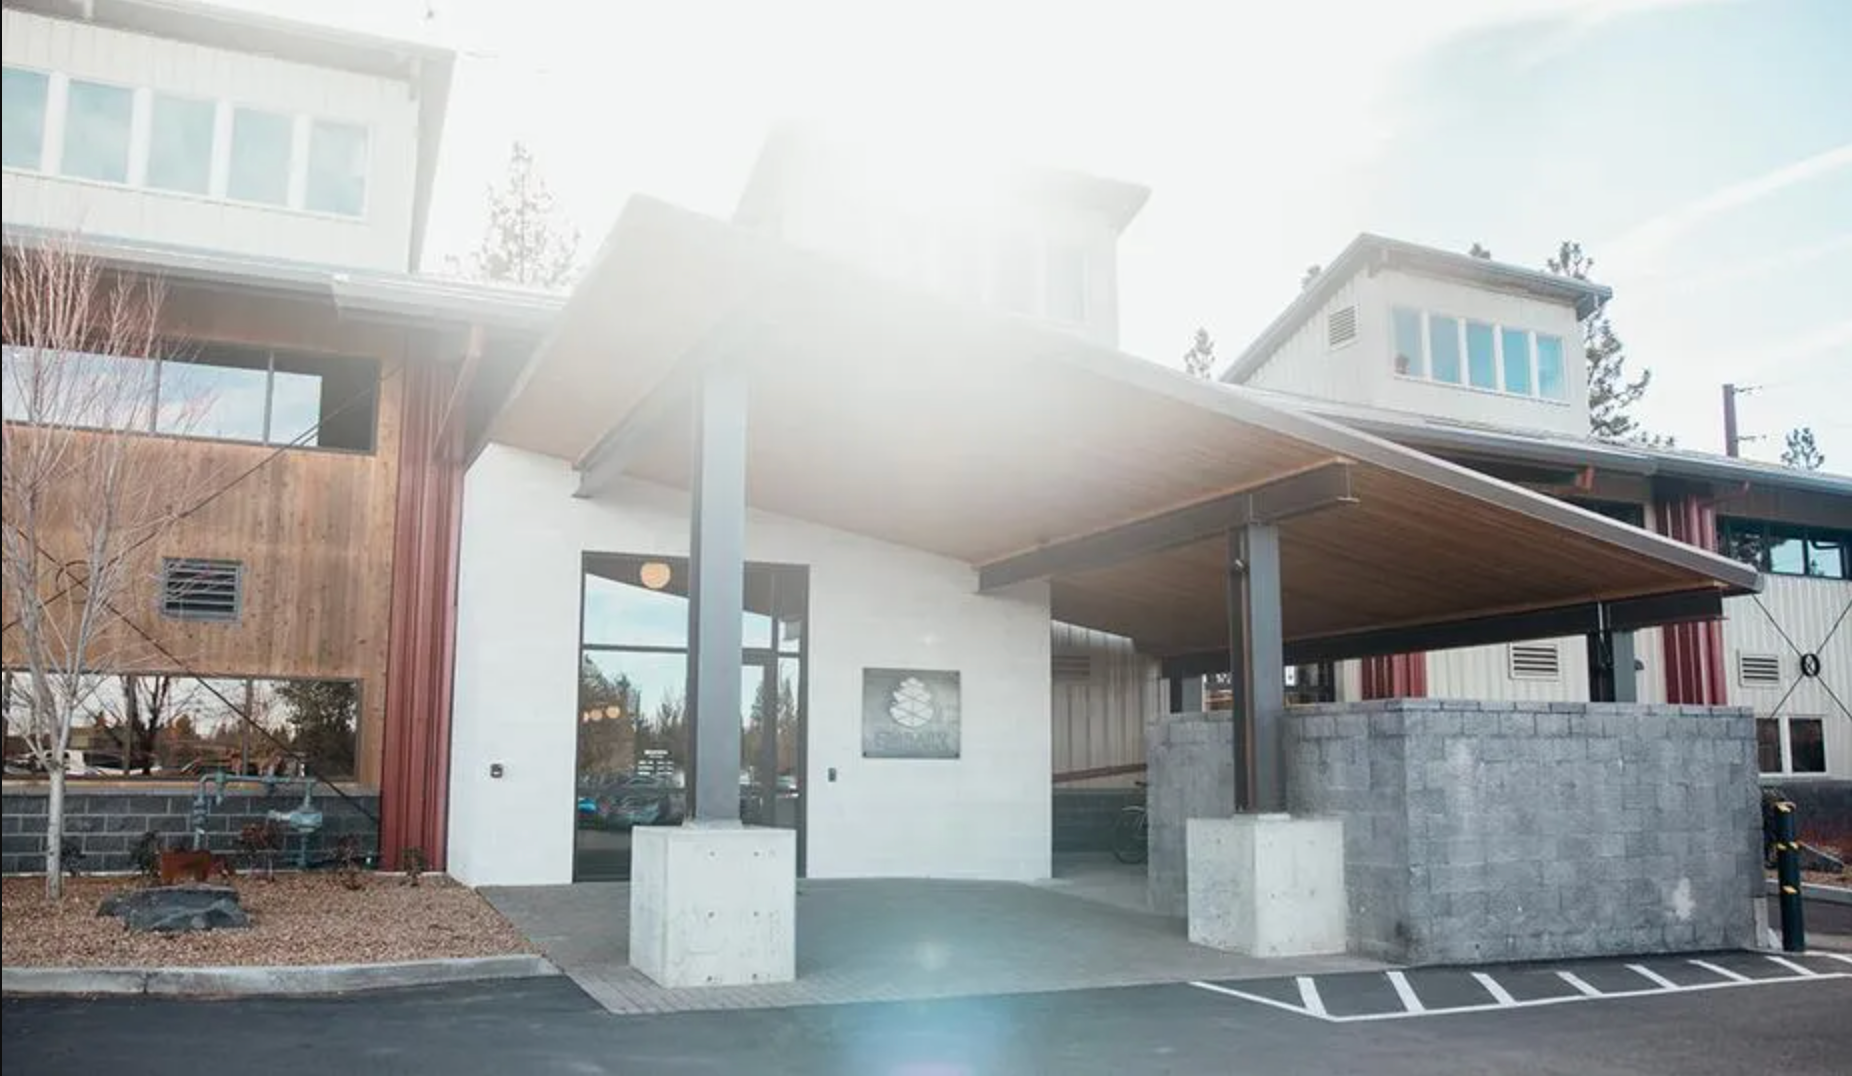 Ruffwear's Headquarters in Bend, Oregon